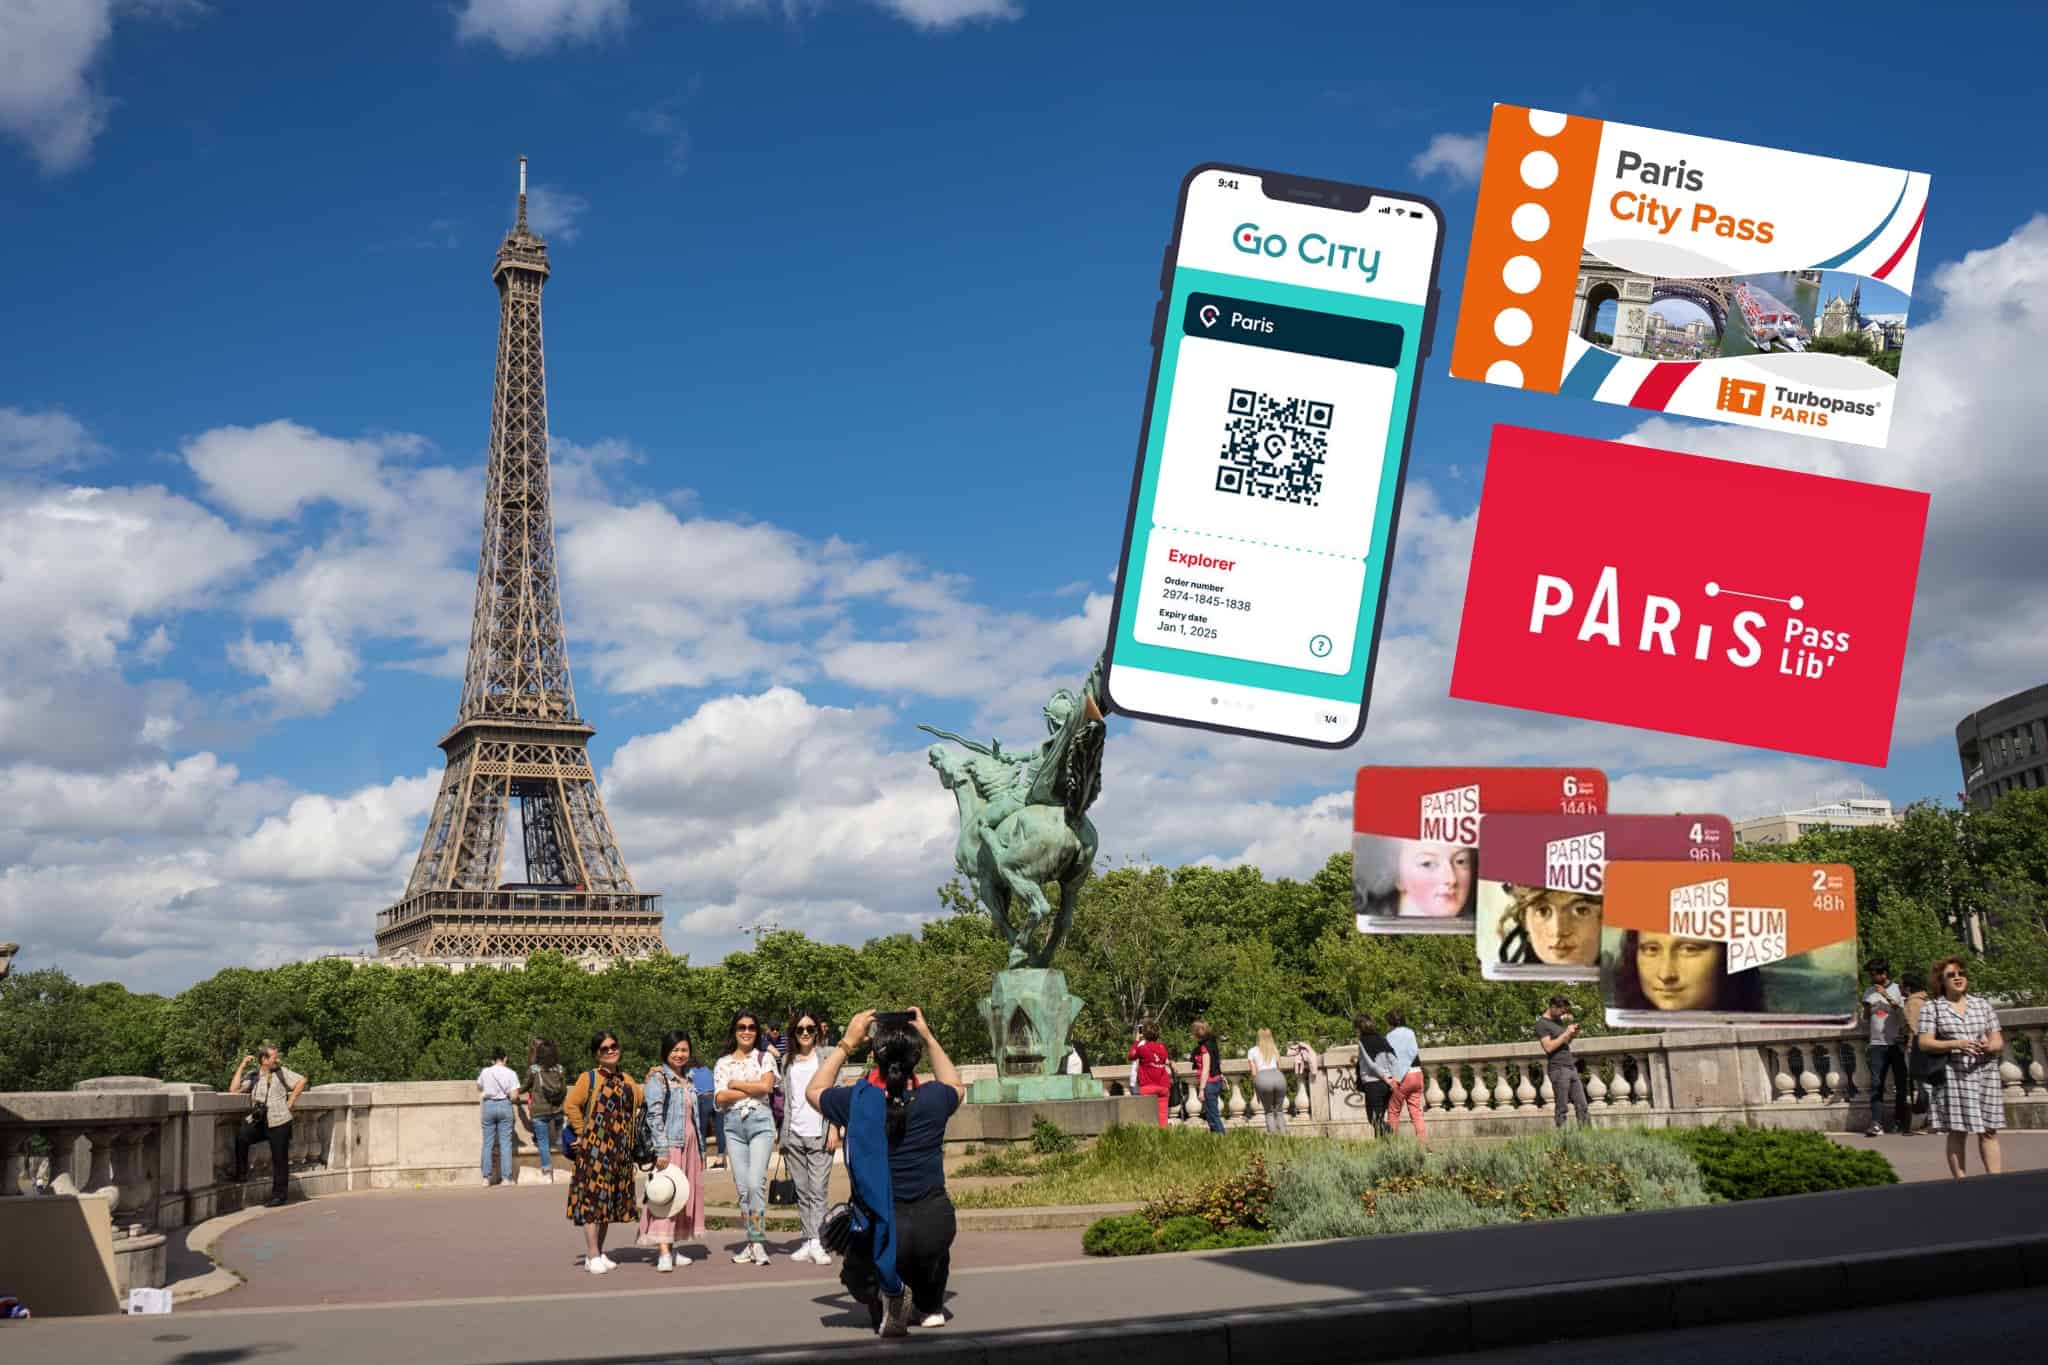 Paris Metro Ticket online: Paris City Pass Vergleich